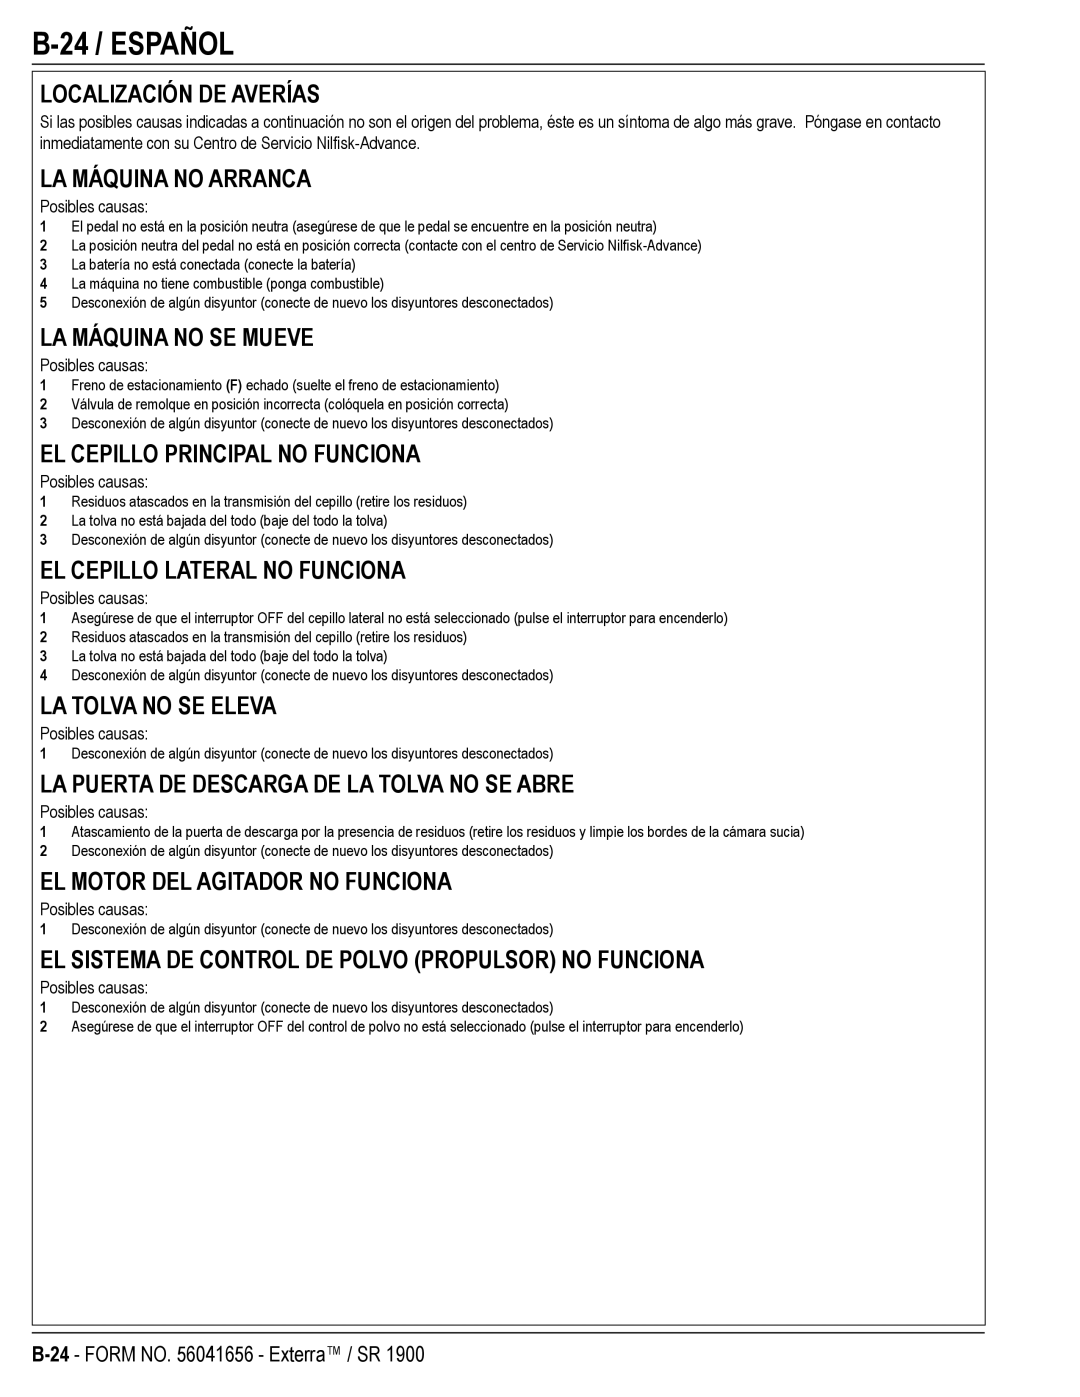 Nilfisk-ALTO SR 1900 manual 24 / Español 